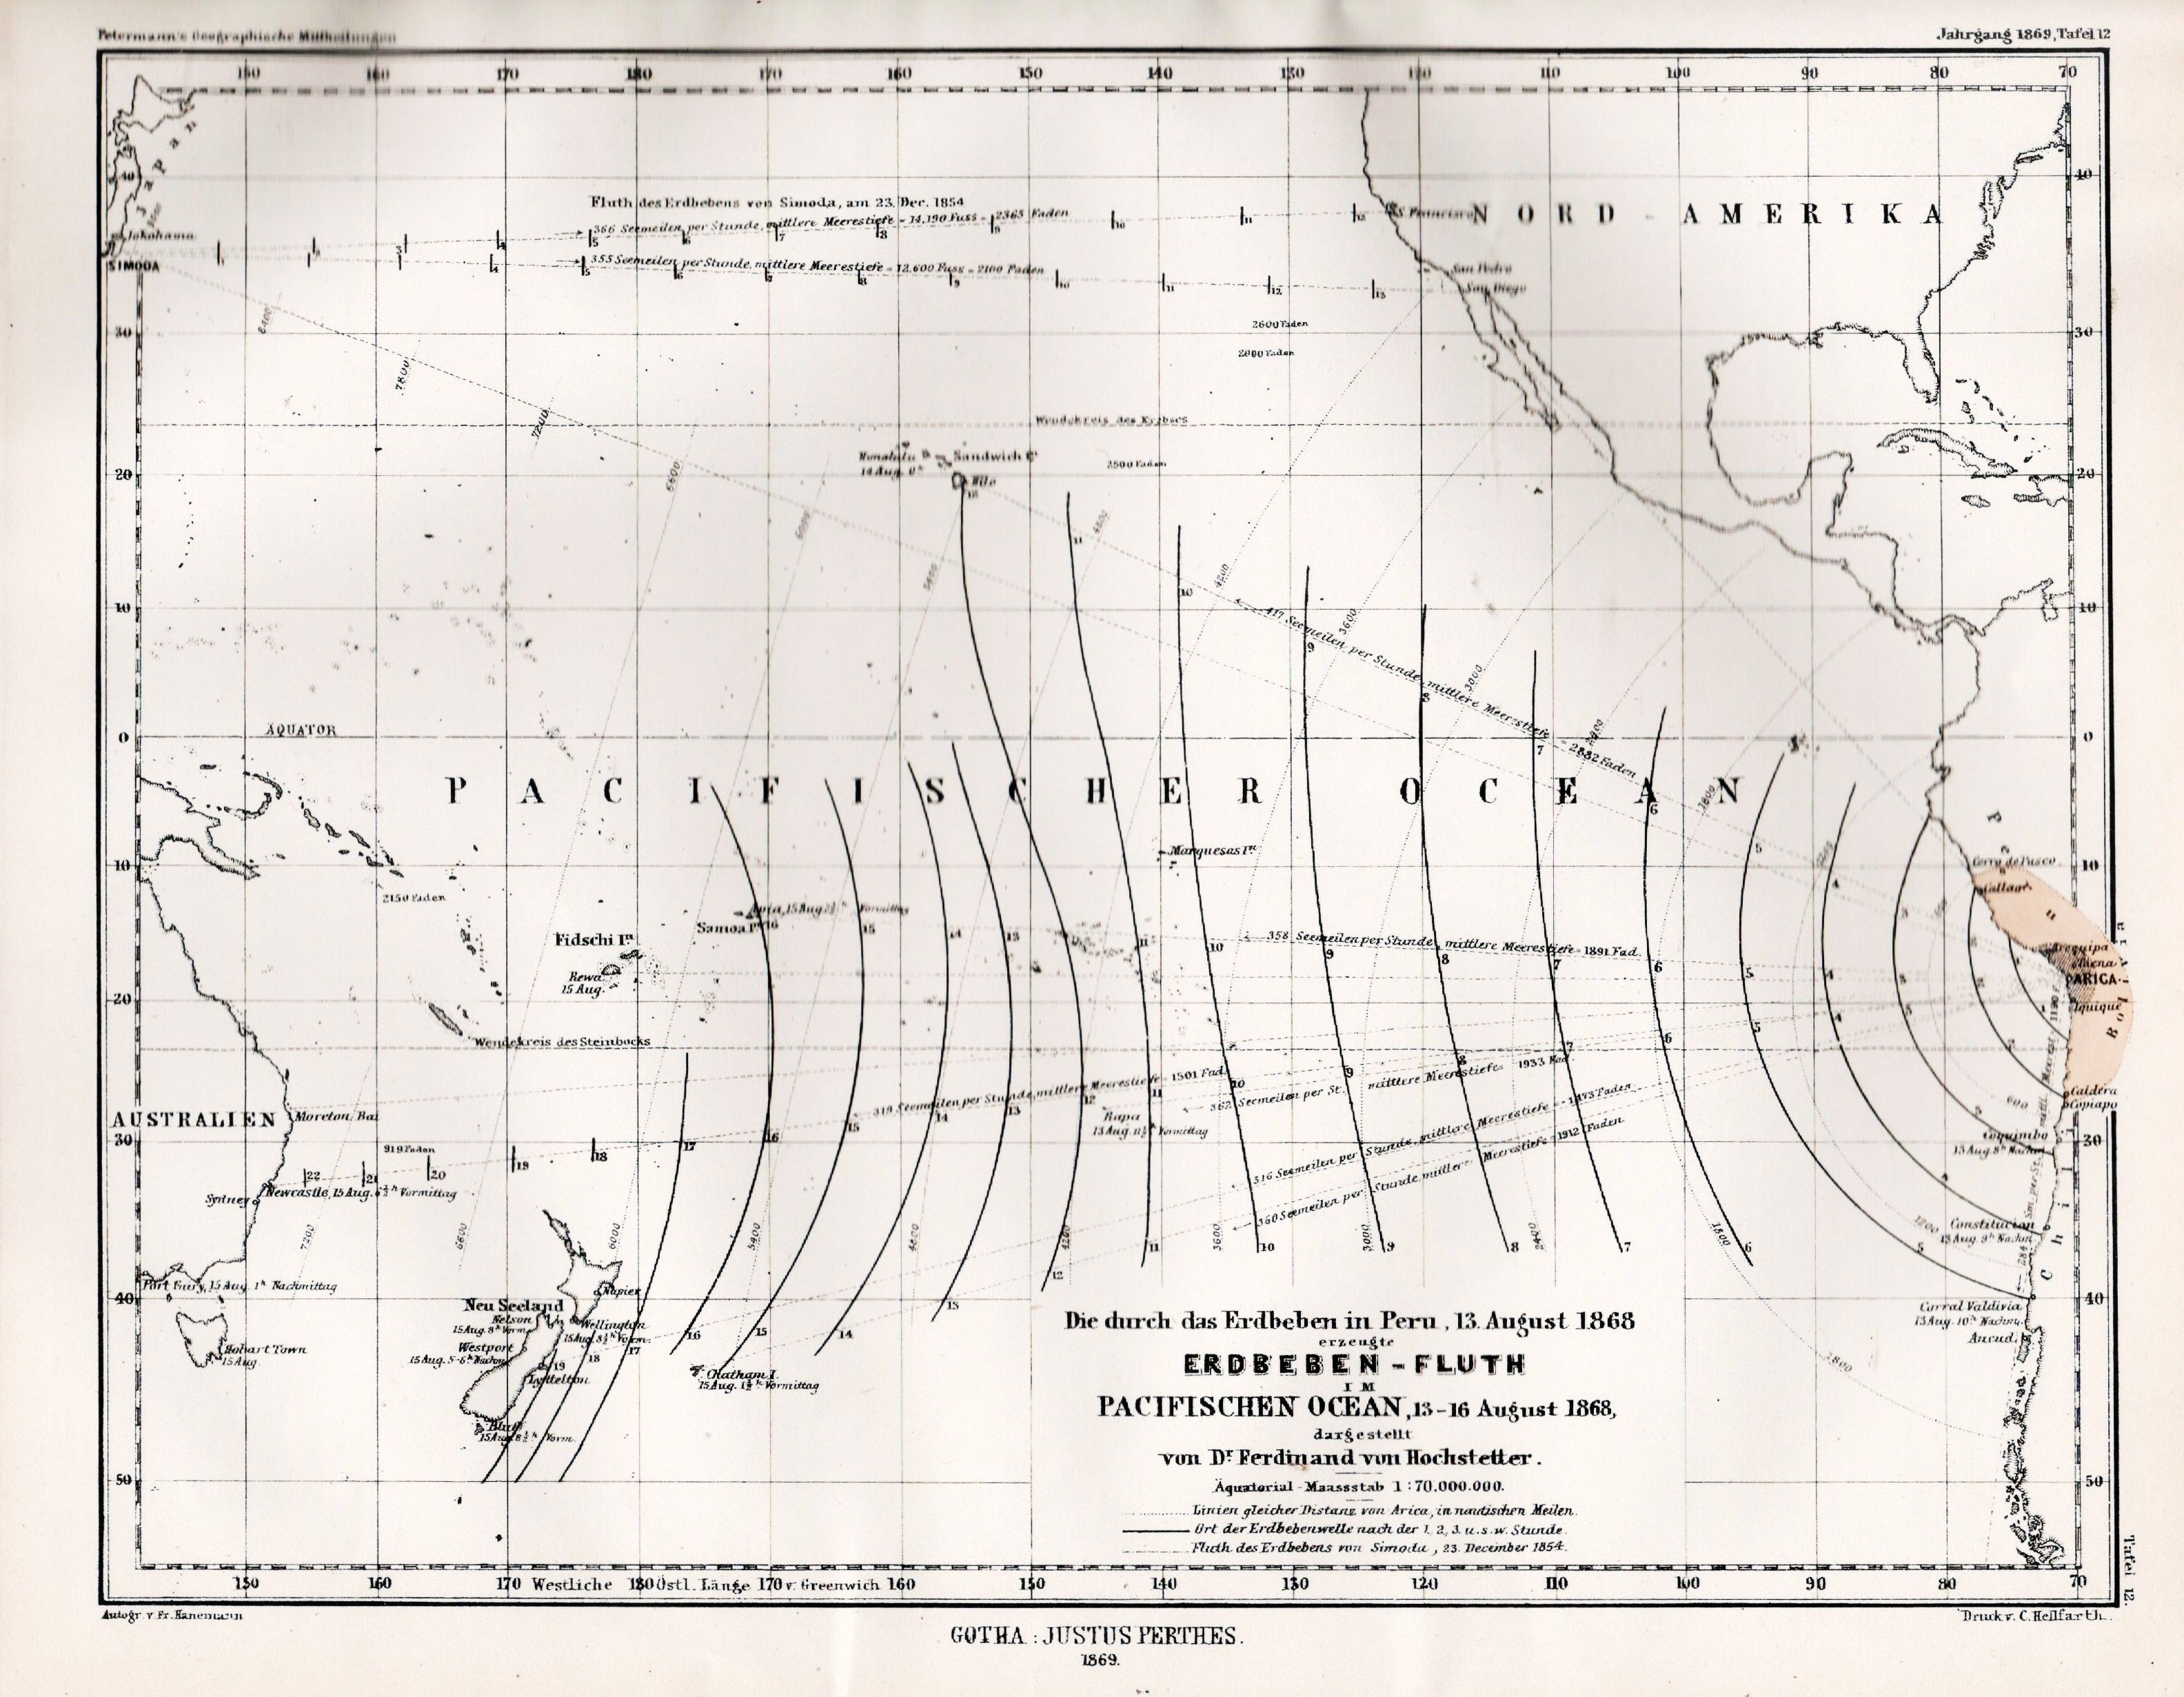 Von Hochstetter's representation of a tsunami propagation after the 1868 Arica earthquake.